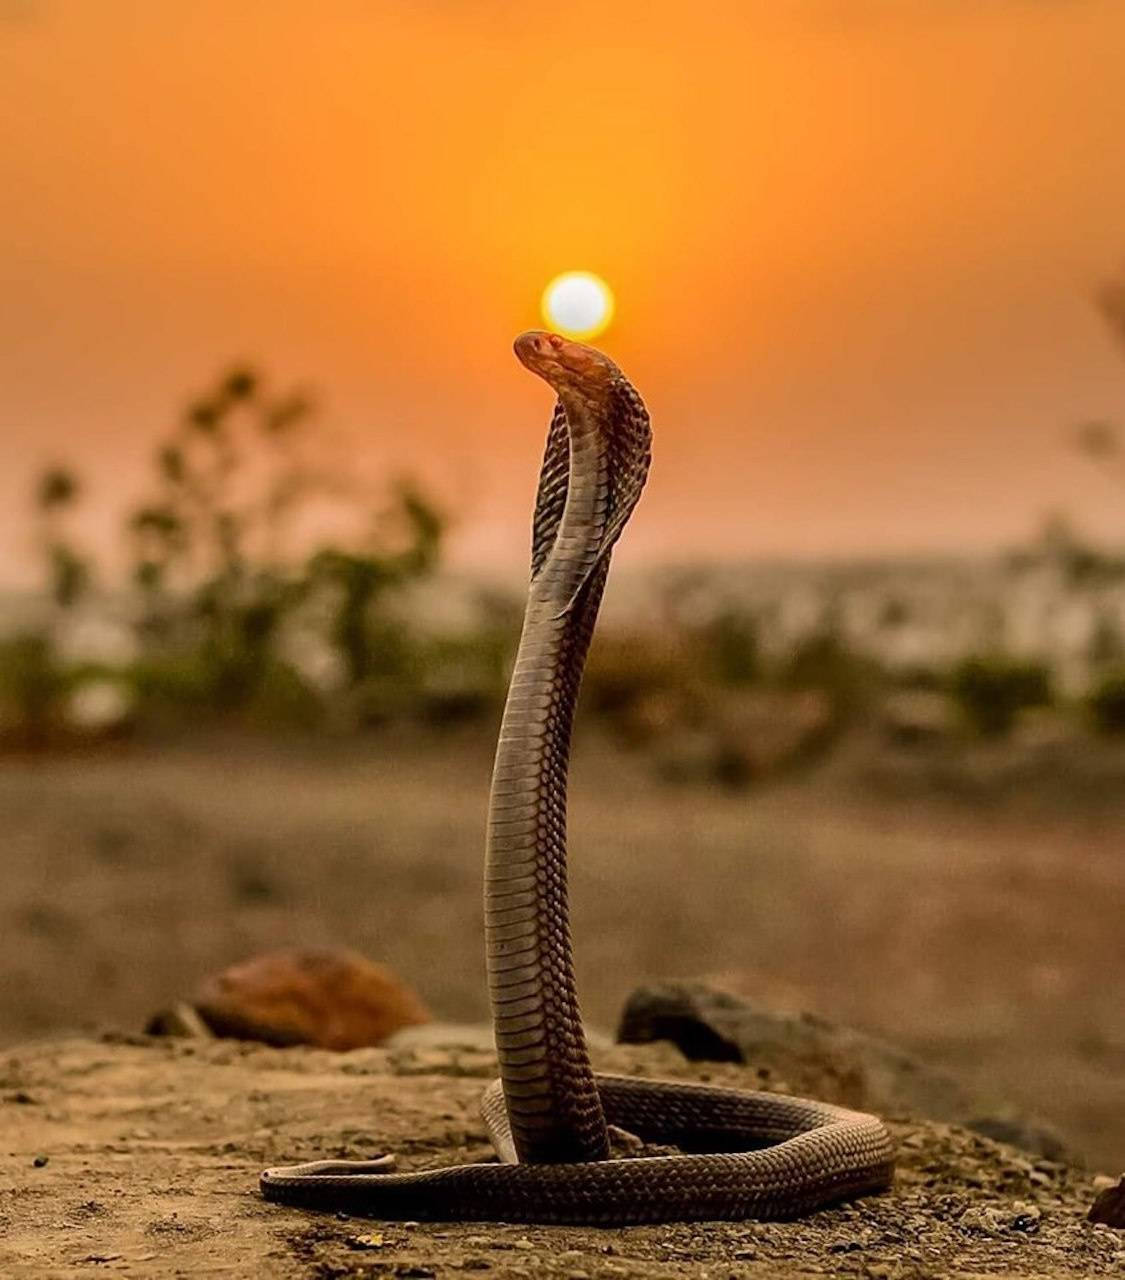 King Cobra Sunset Background